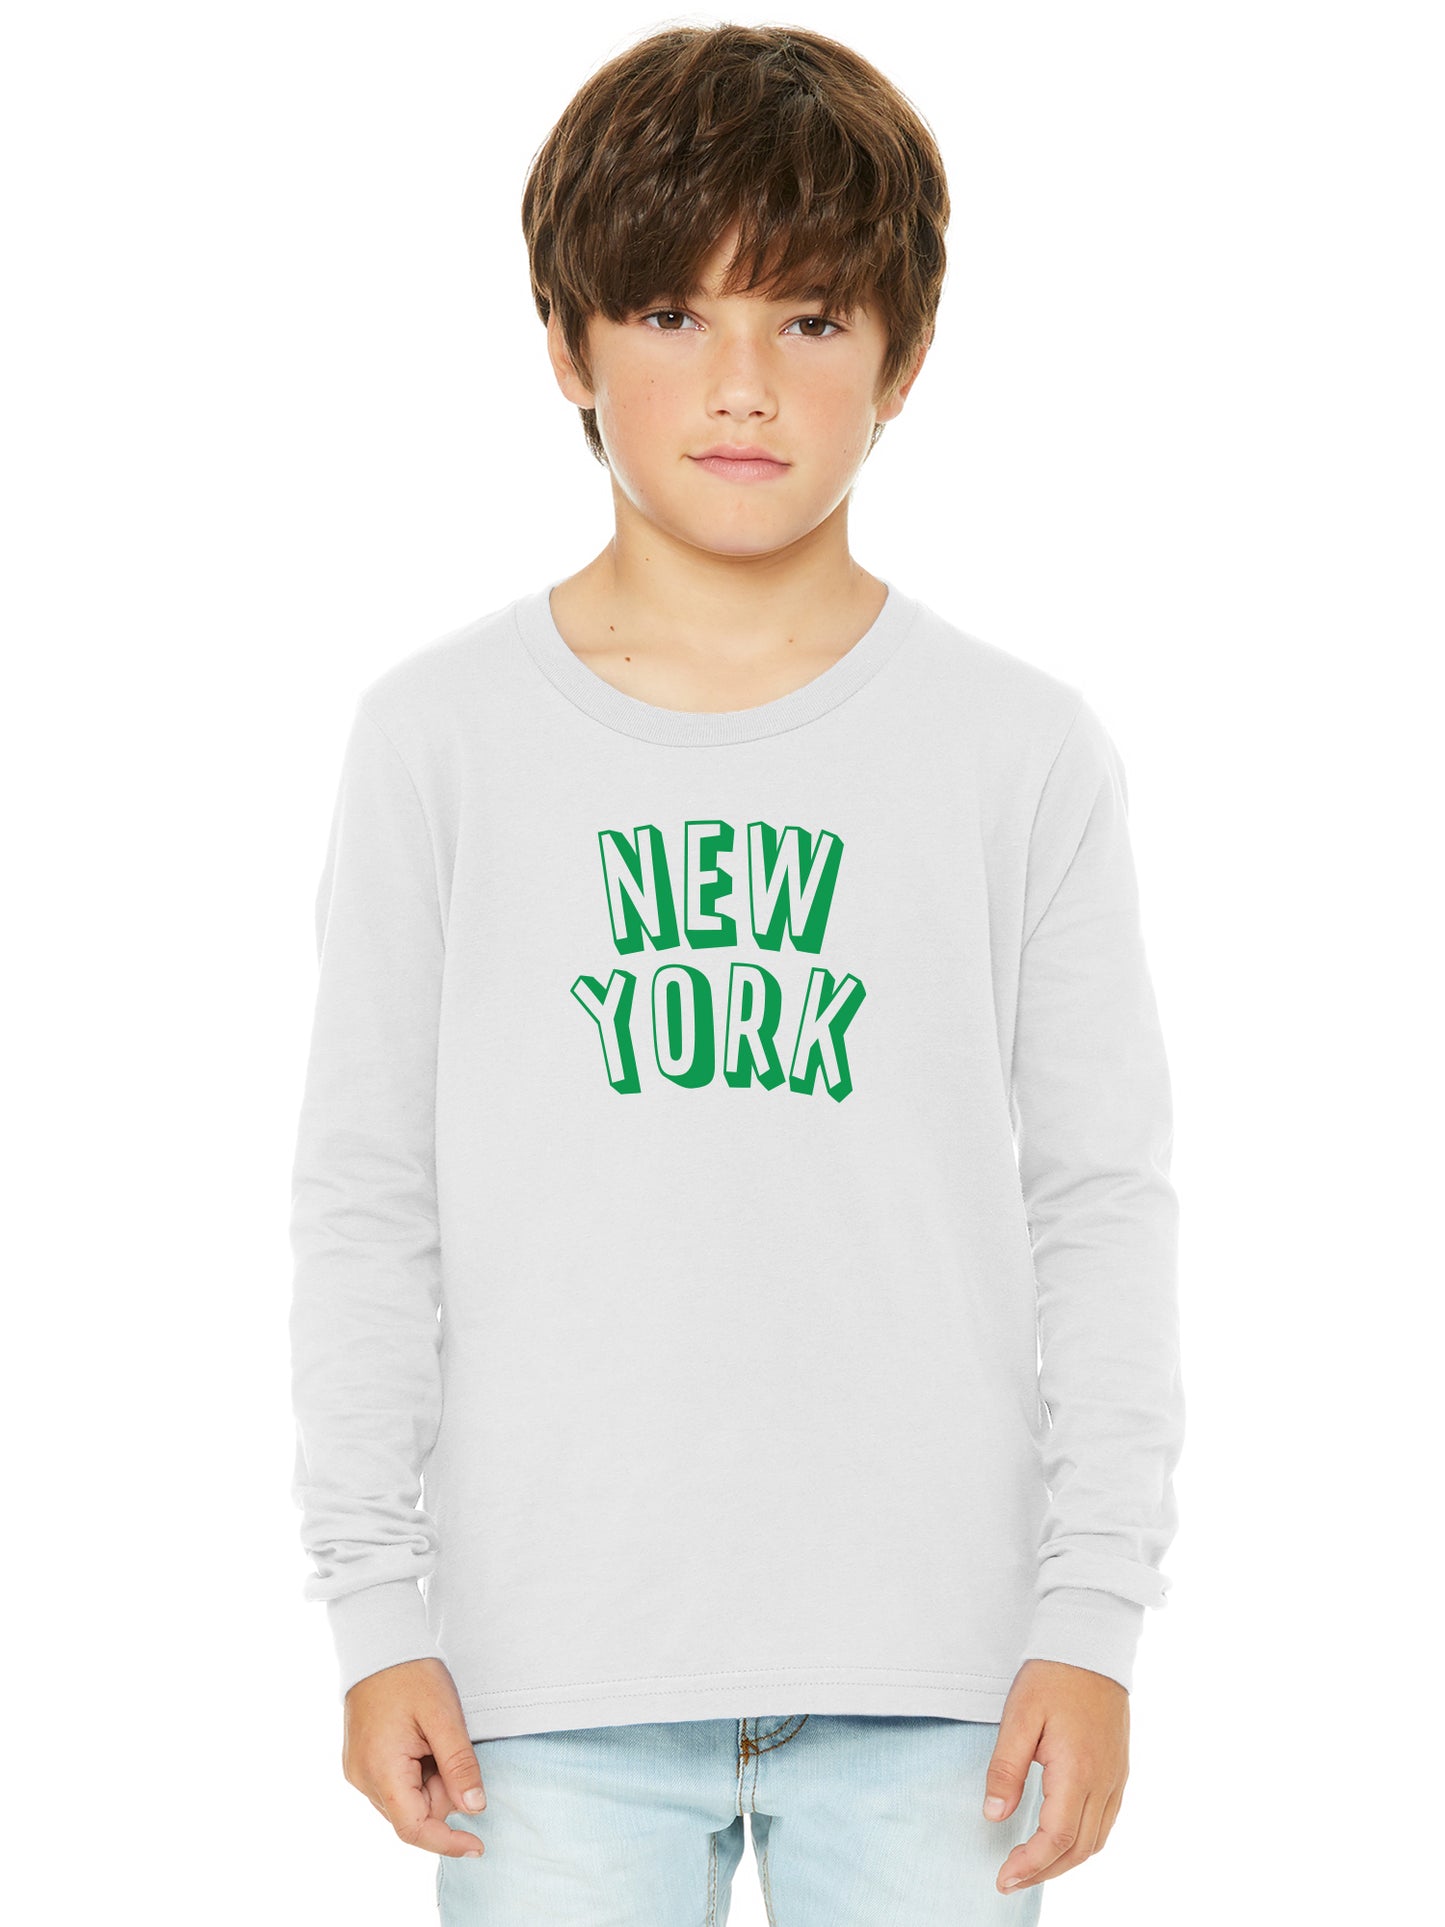 Daxton Youth Long Sleeve New York Basic Tshirt